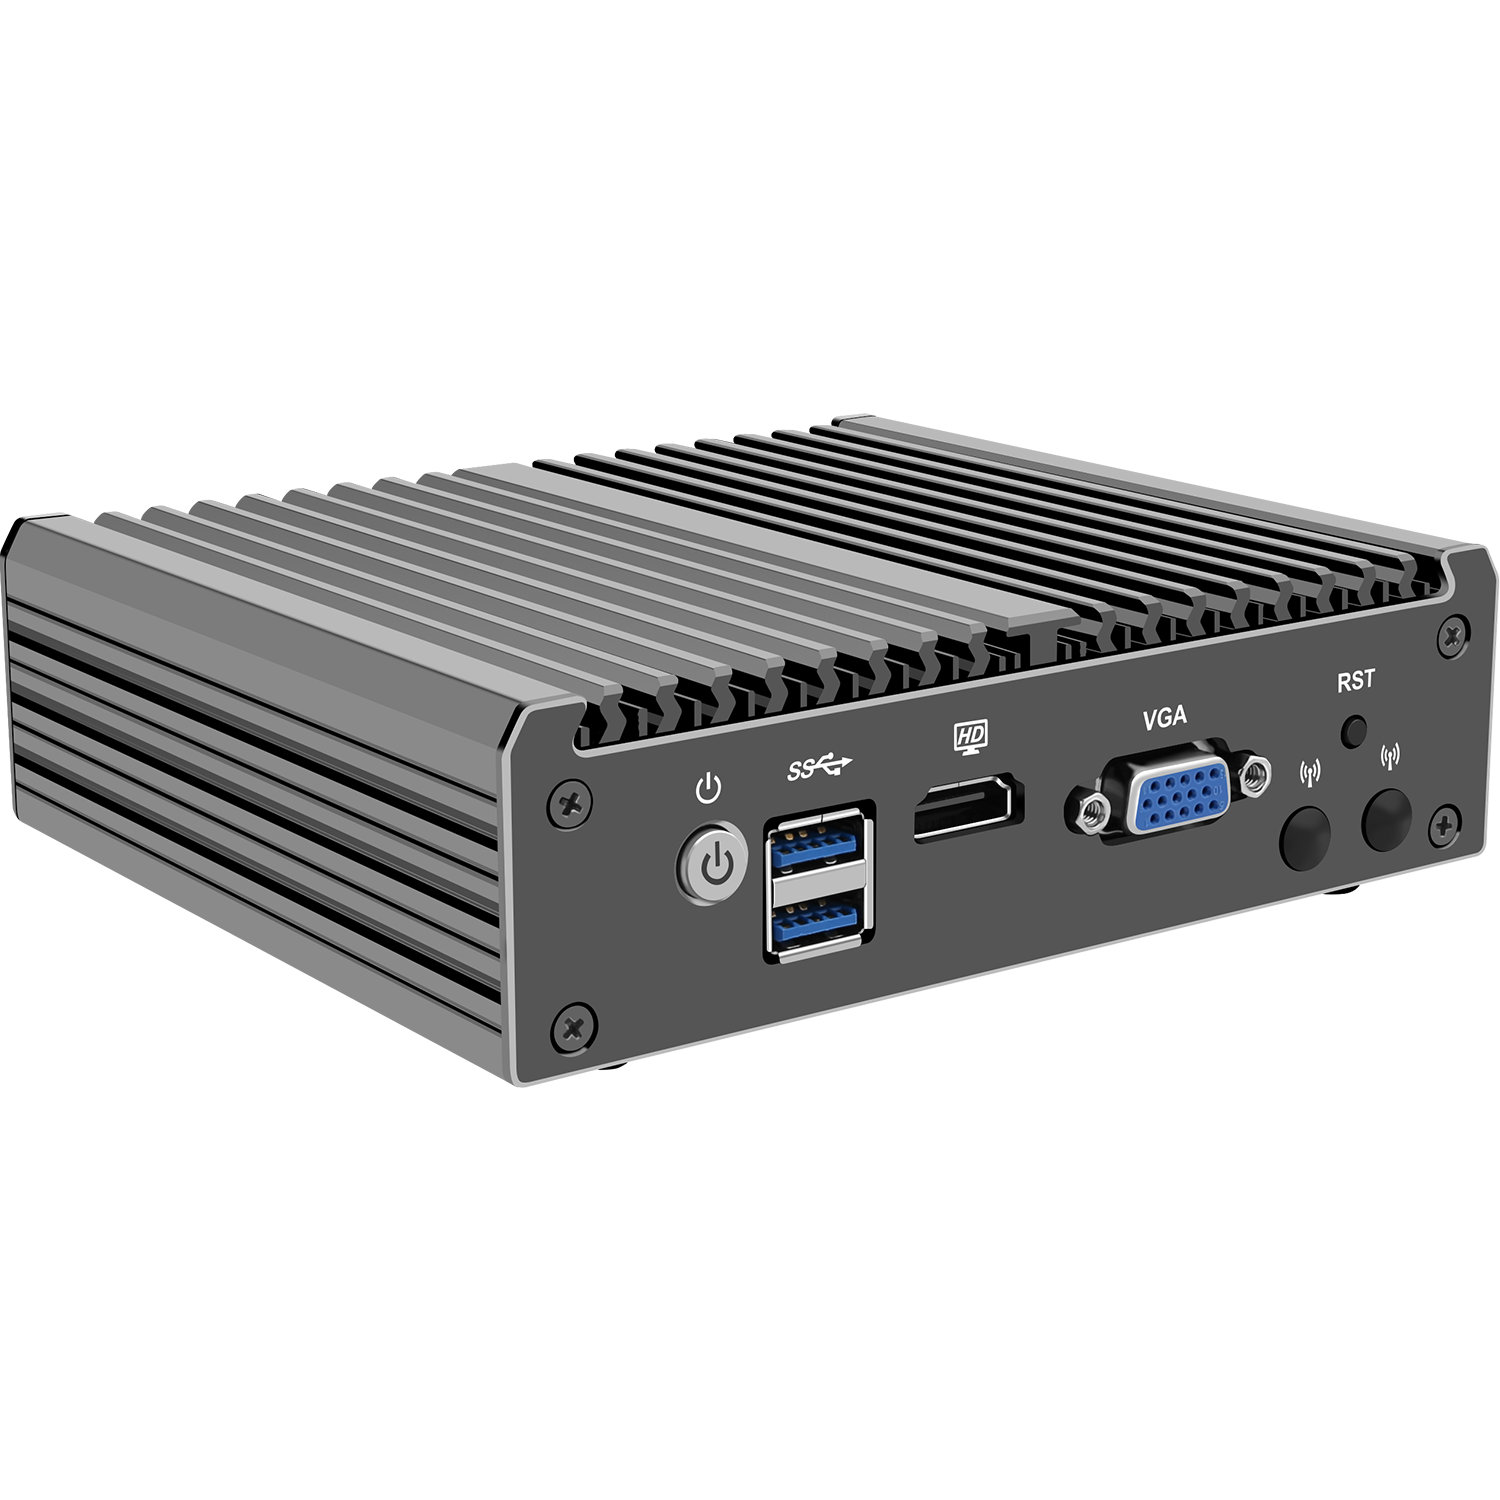 Intel J4125 Desktop PC Four Network Ports 2*USB Mini Computer for Firewall Applications